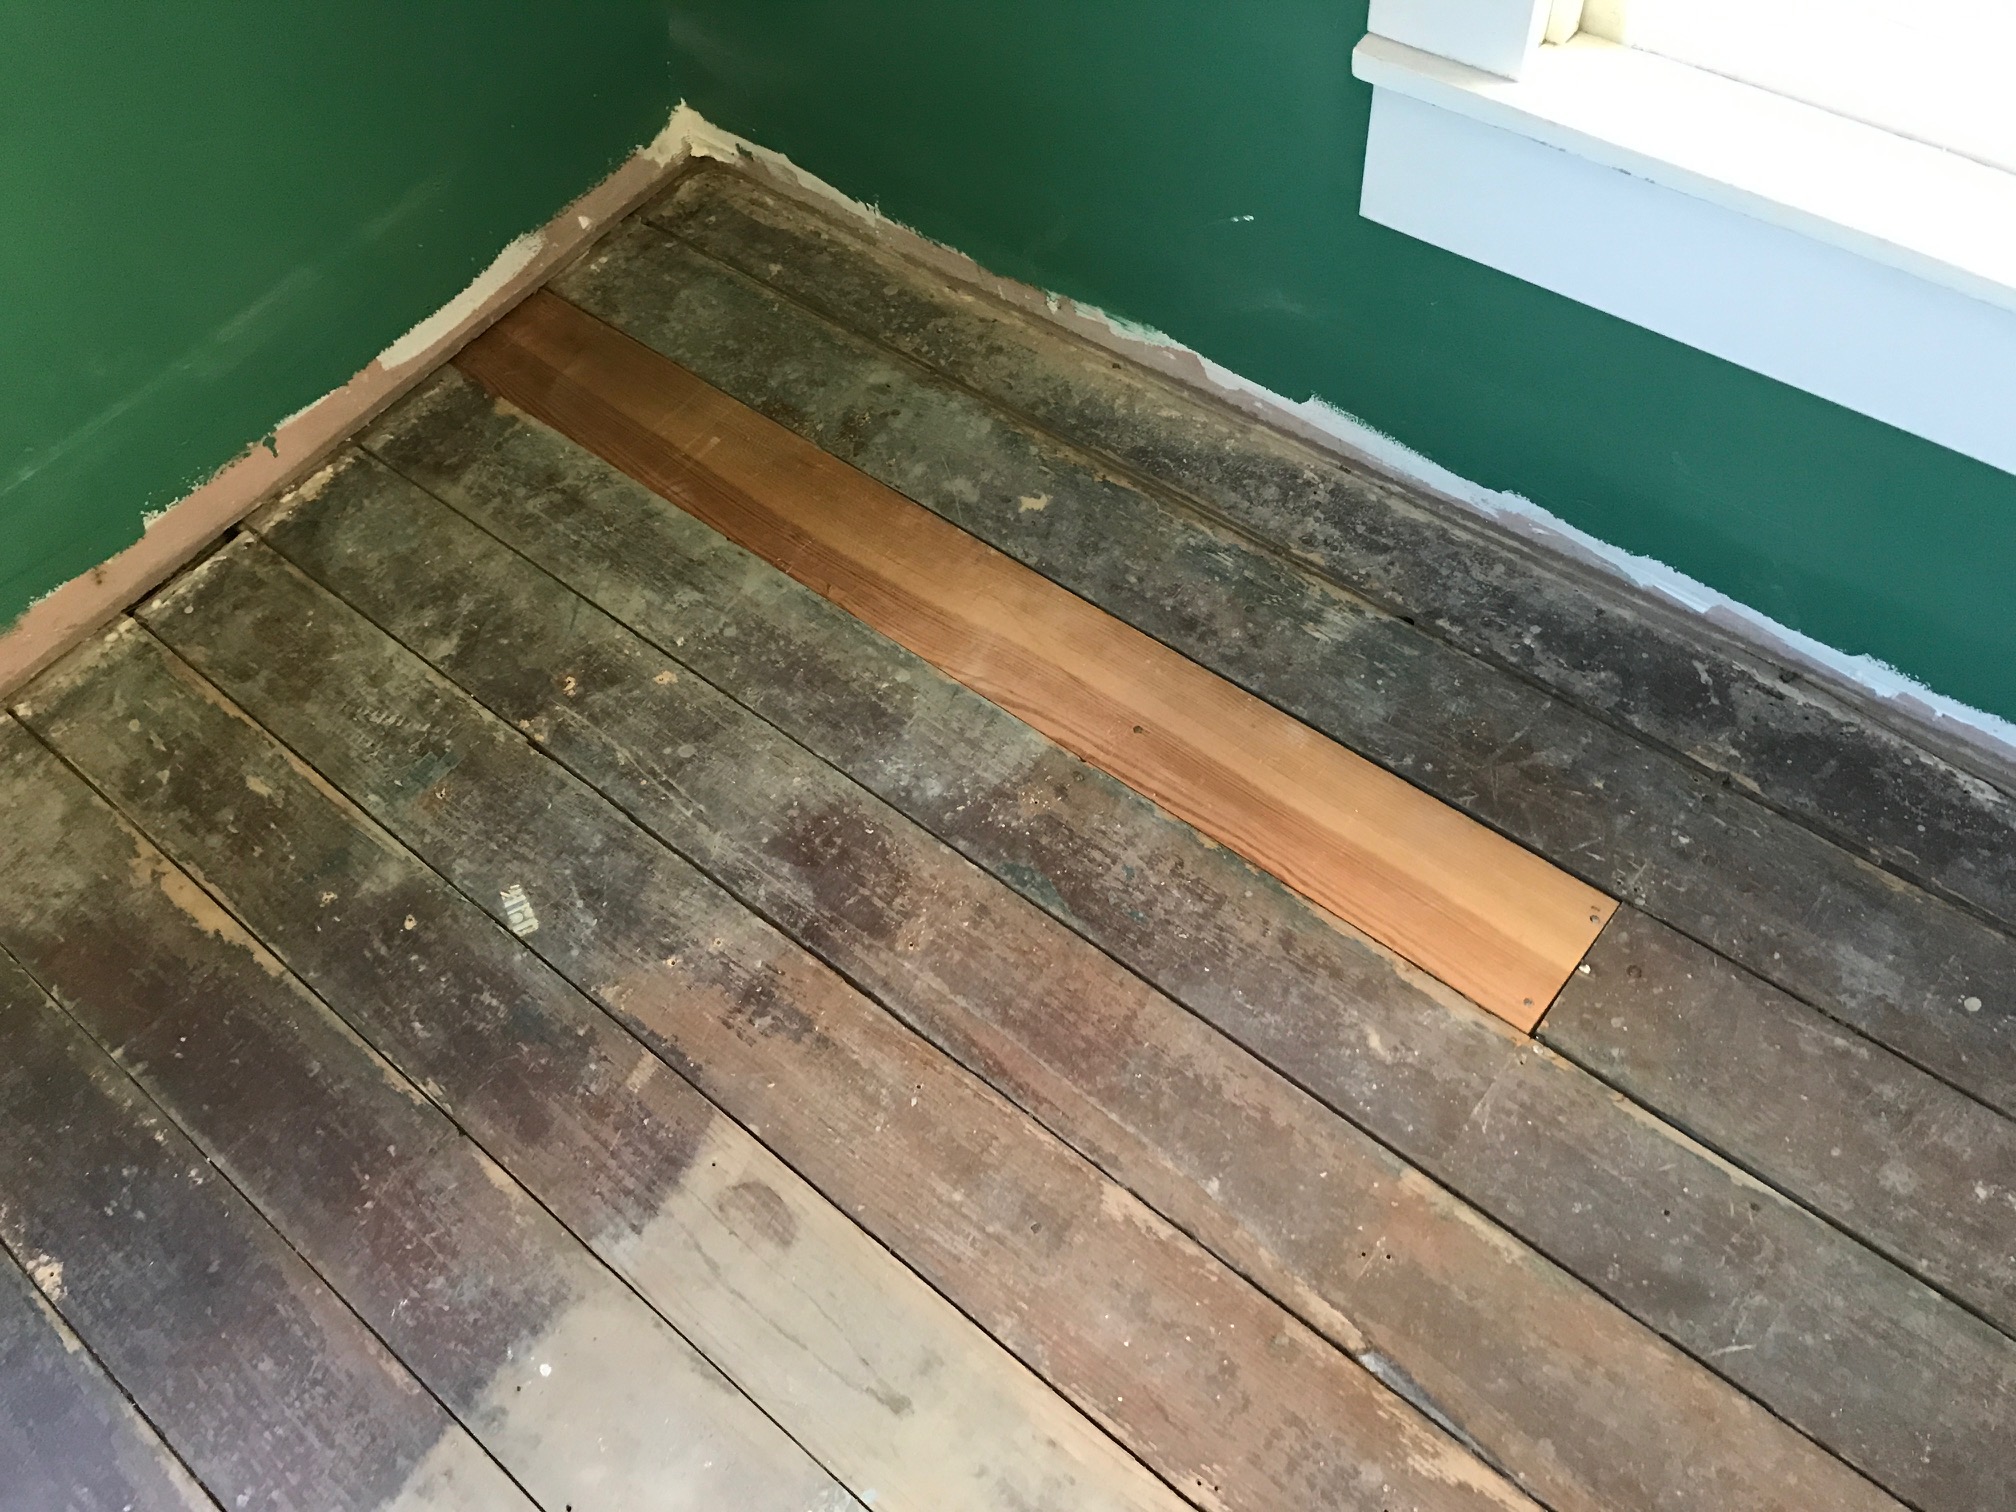 Antique Douglas Fir Floorboards, Refinishing Old Hardwood Floors With Gaps